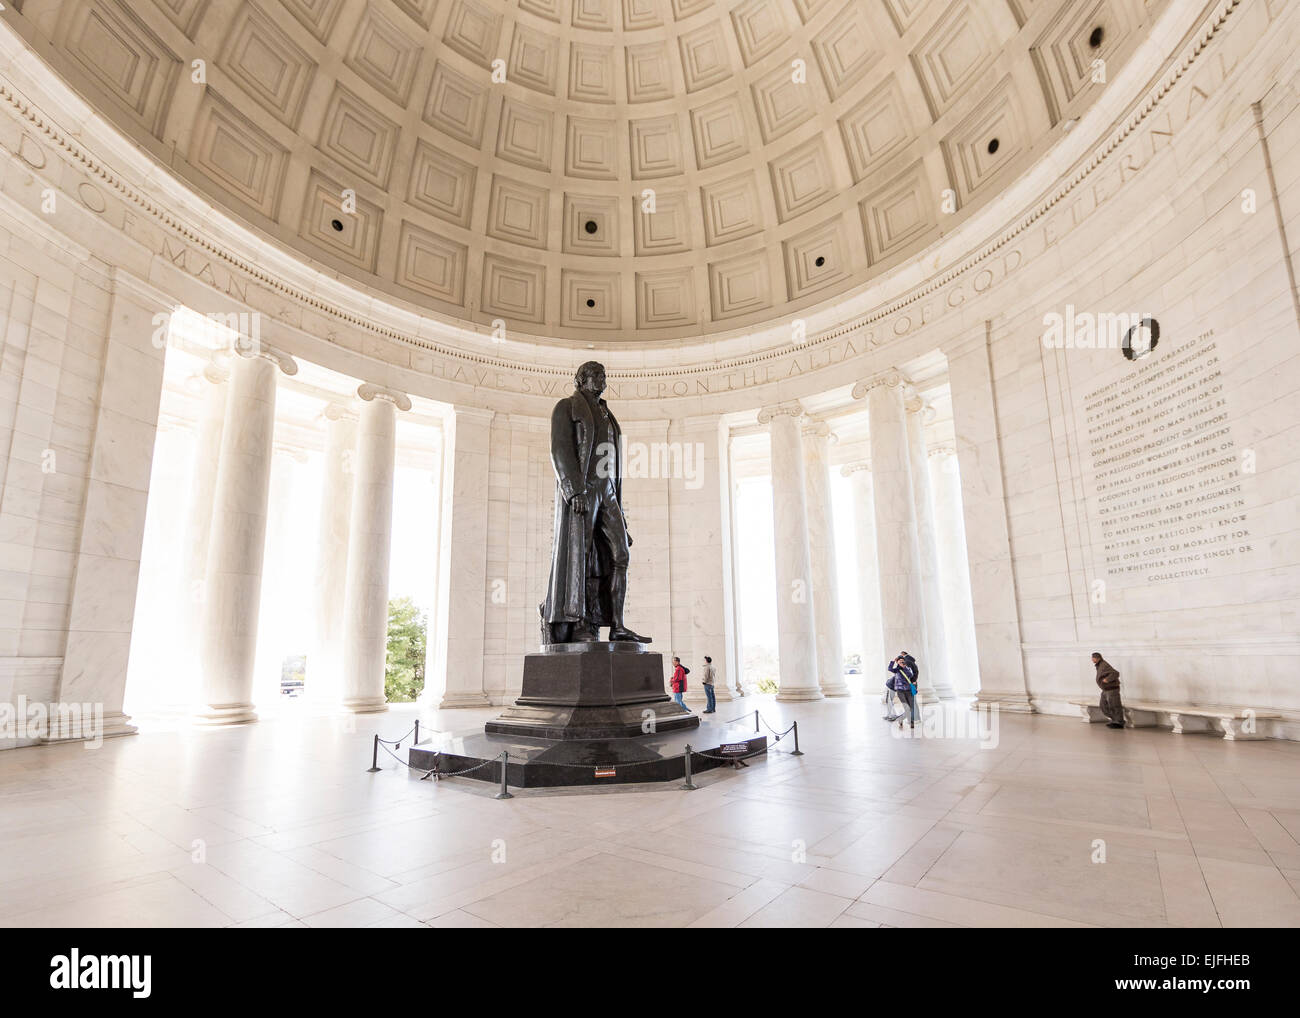 WASHINGTON, DC, USA - Jefferson Memorial. Bronze statue of Thomas Jefferson in rotunda. Stock Photo